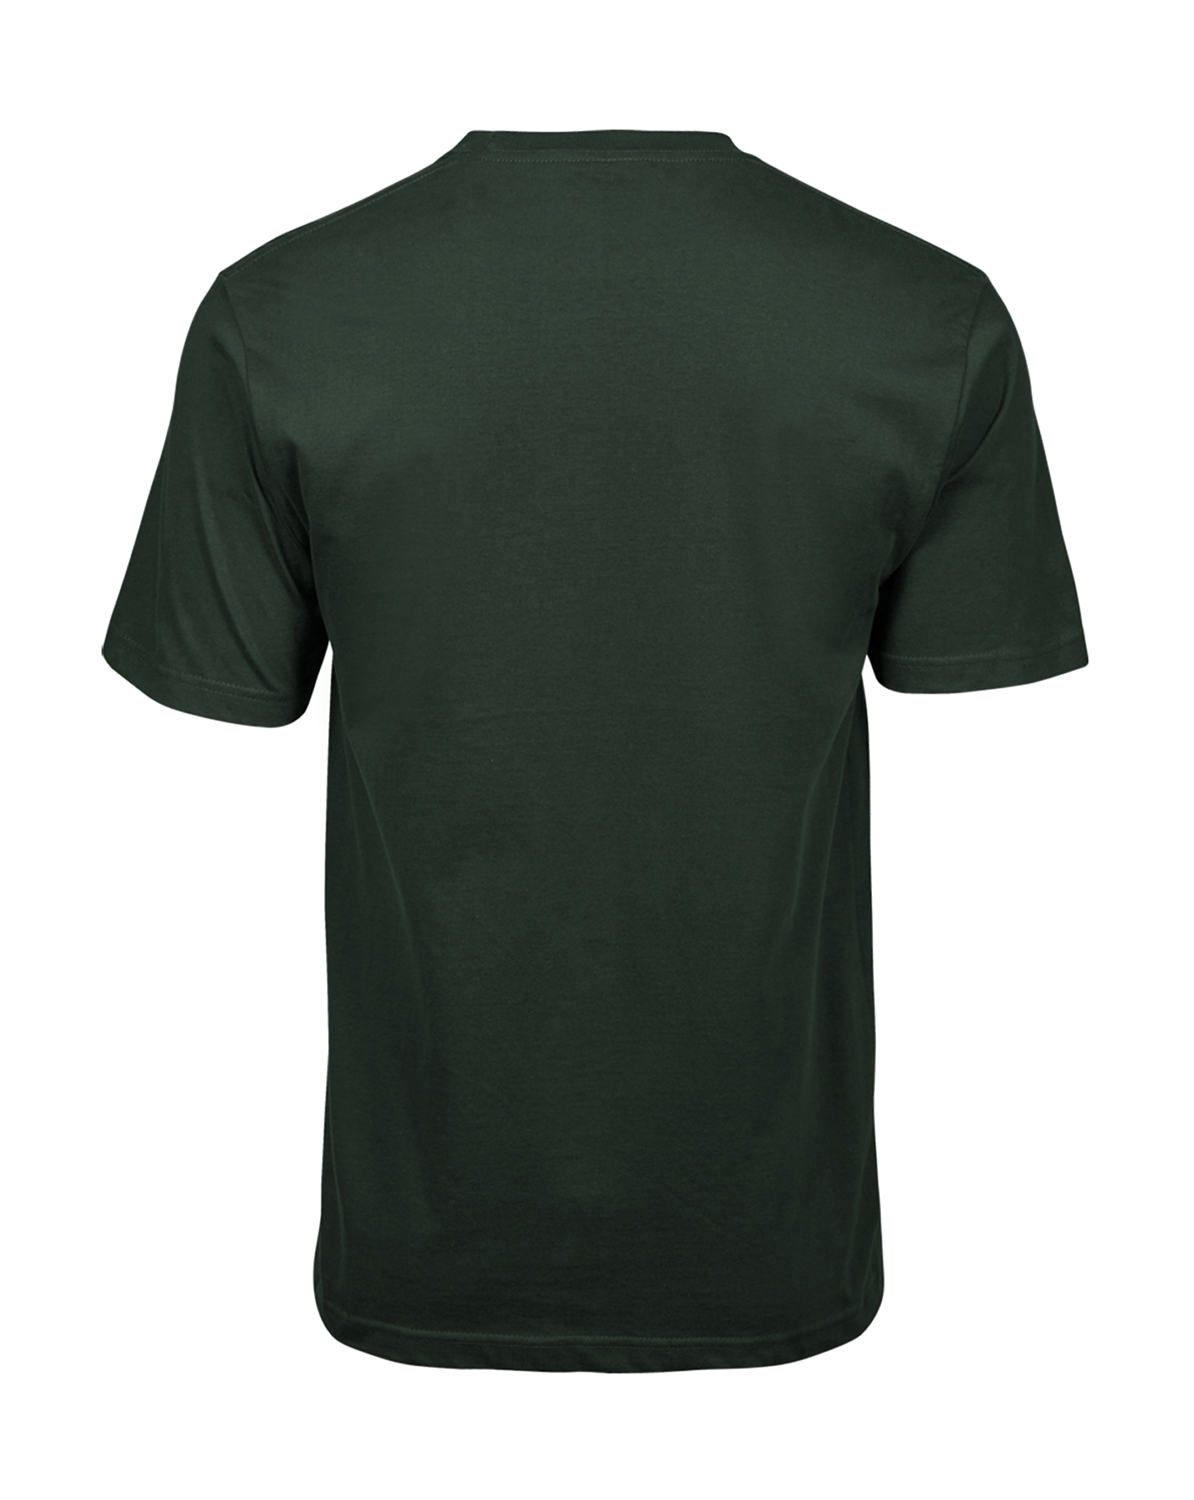 Werk T - Shirts Tee Jays 8000 Sof-Tee - back